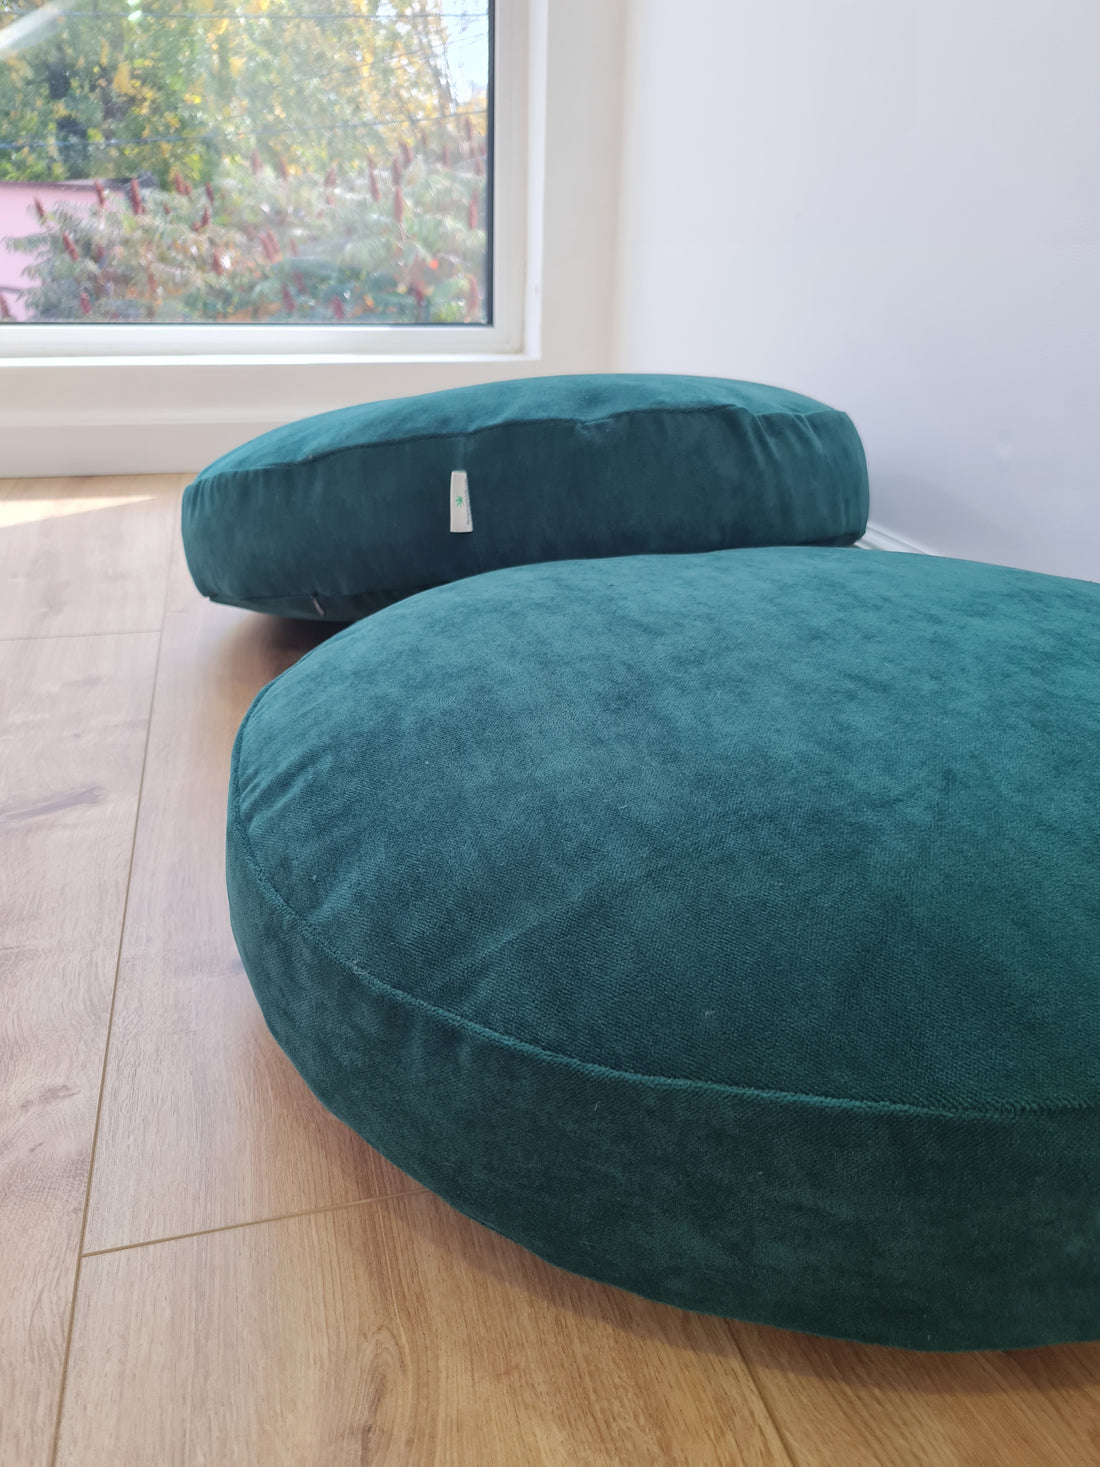 Green Hemp Floor cushion with organic hemp fiber filling in linen